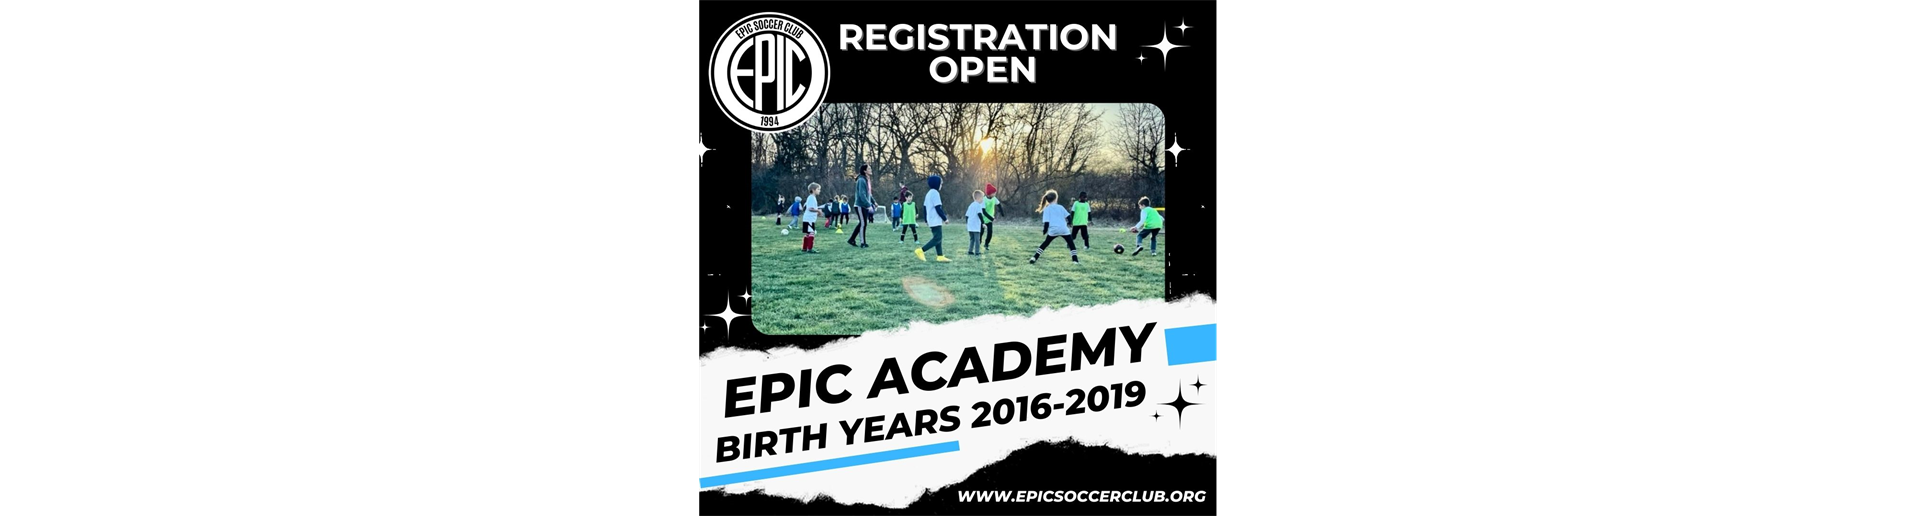 EPIC Academy Registration